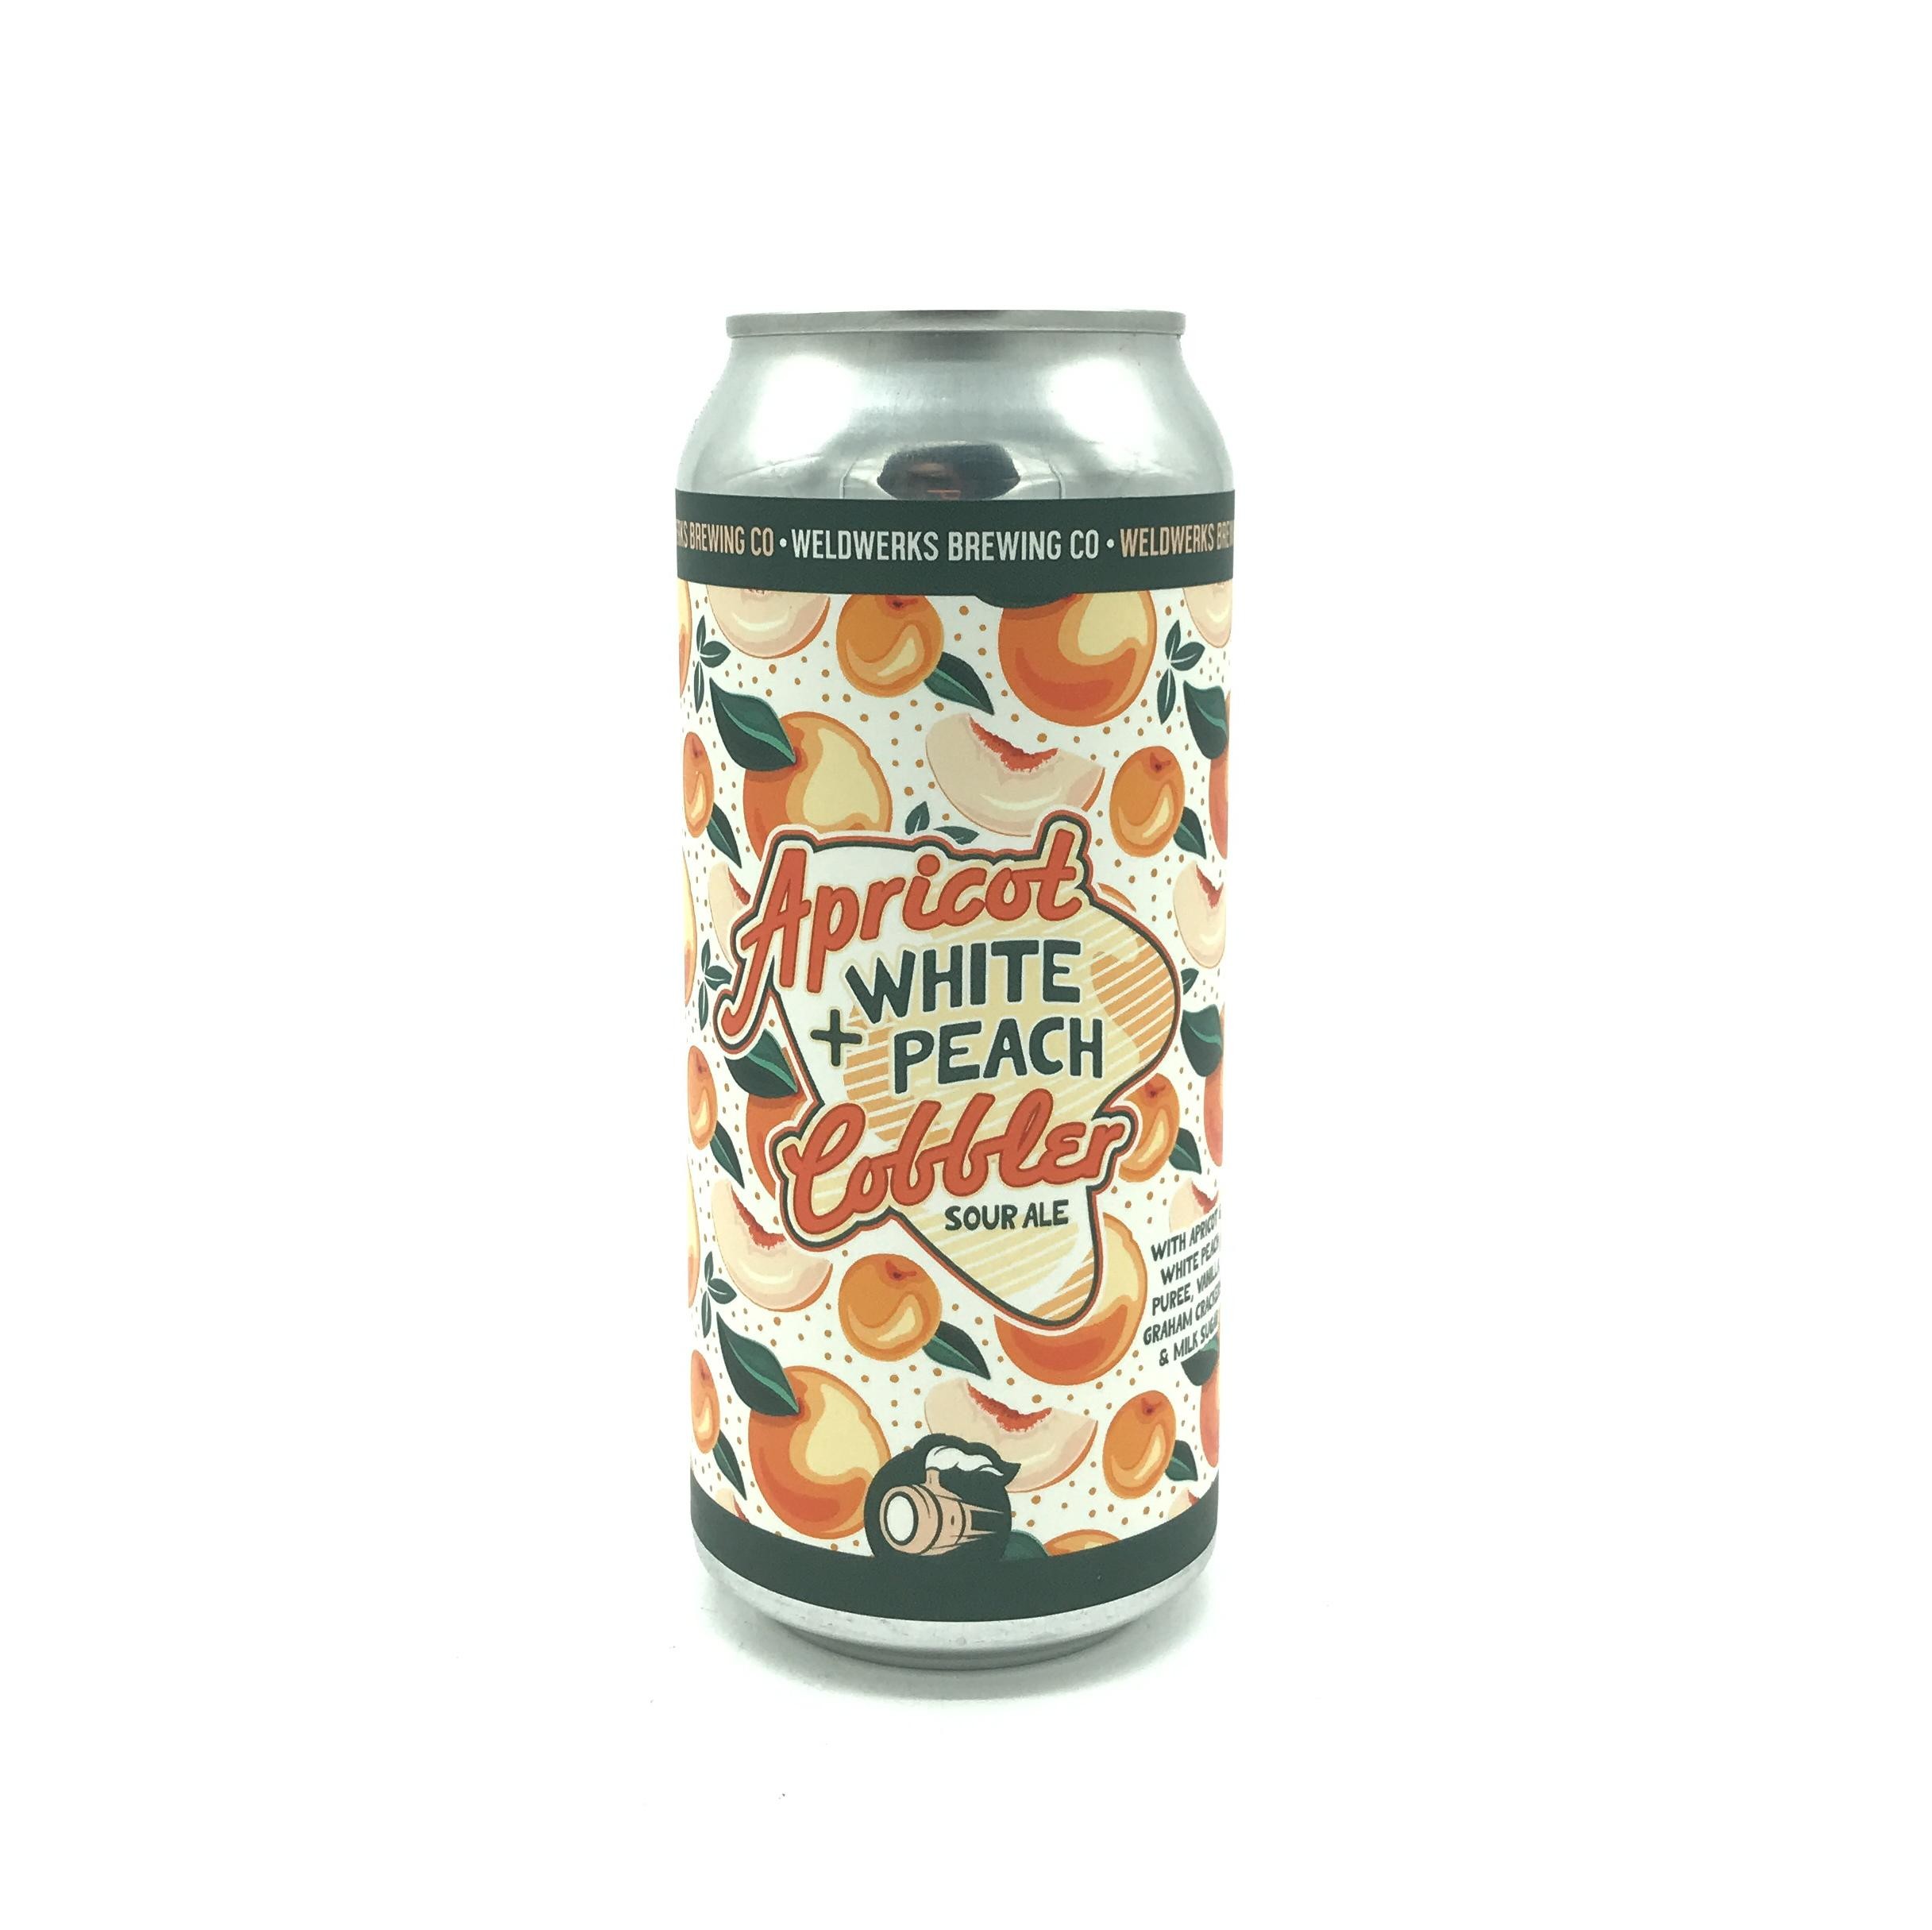 WeldWerks - Apricot + White Peach Cobbler